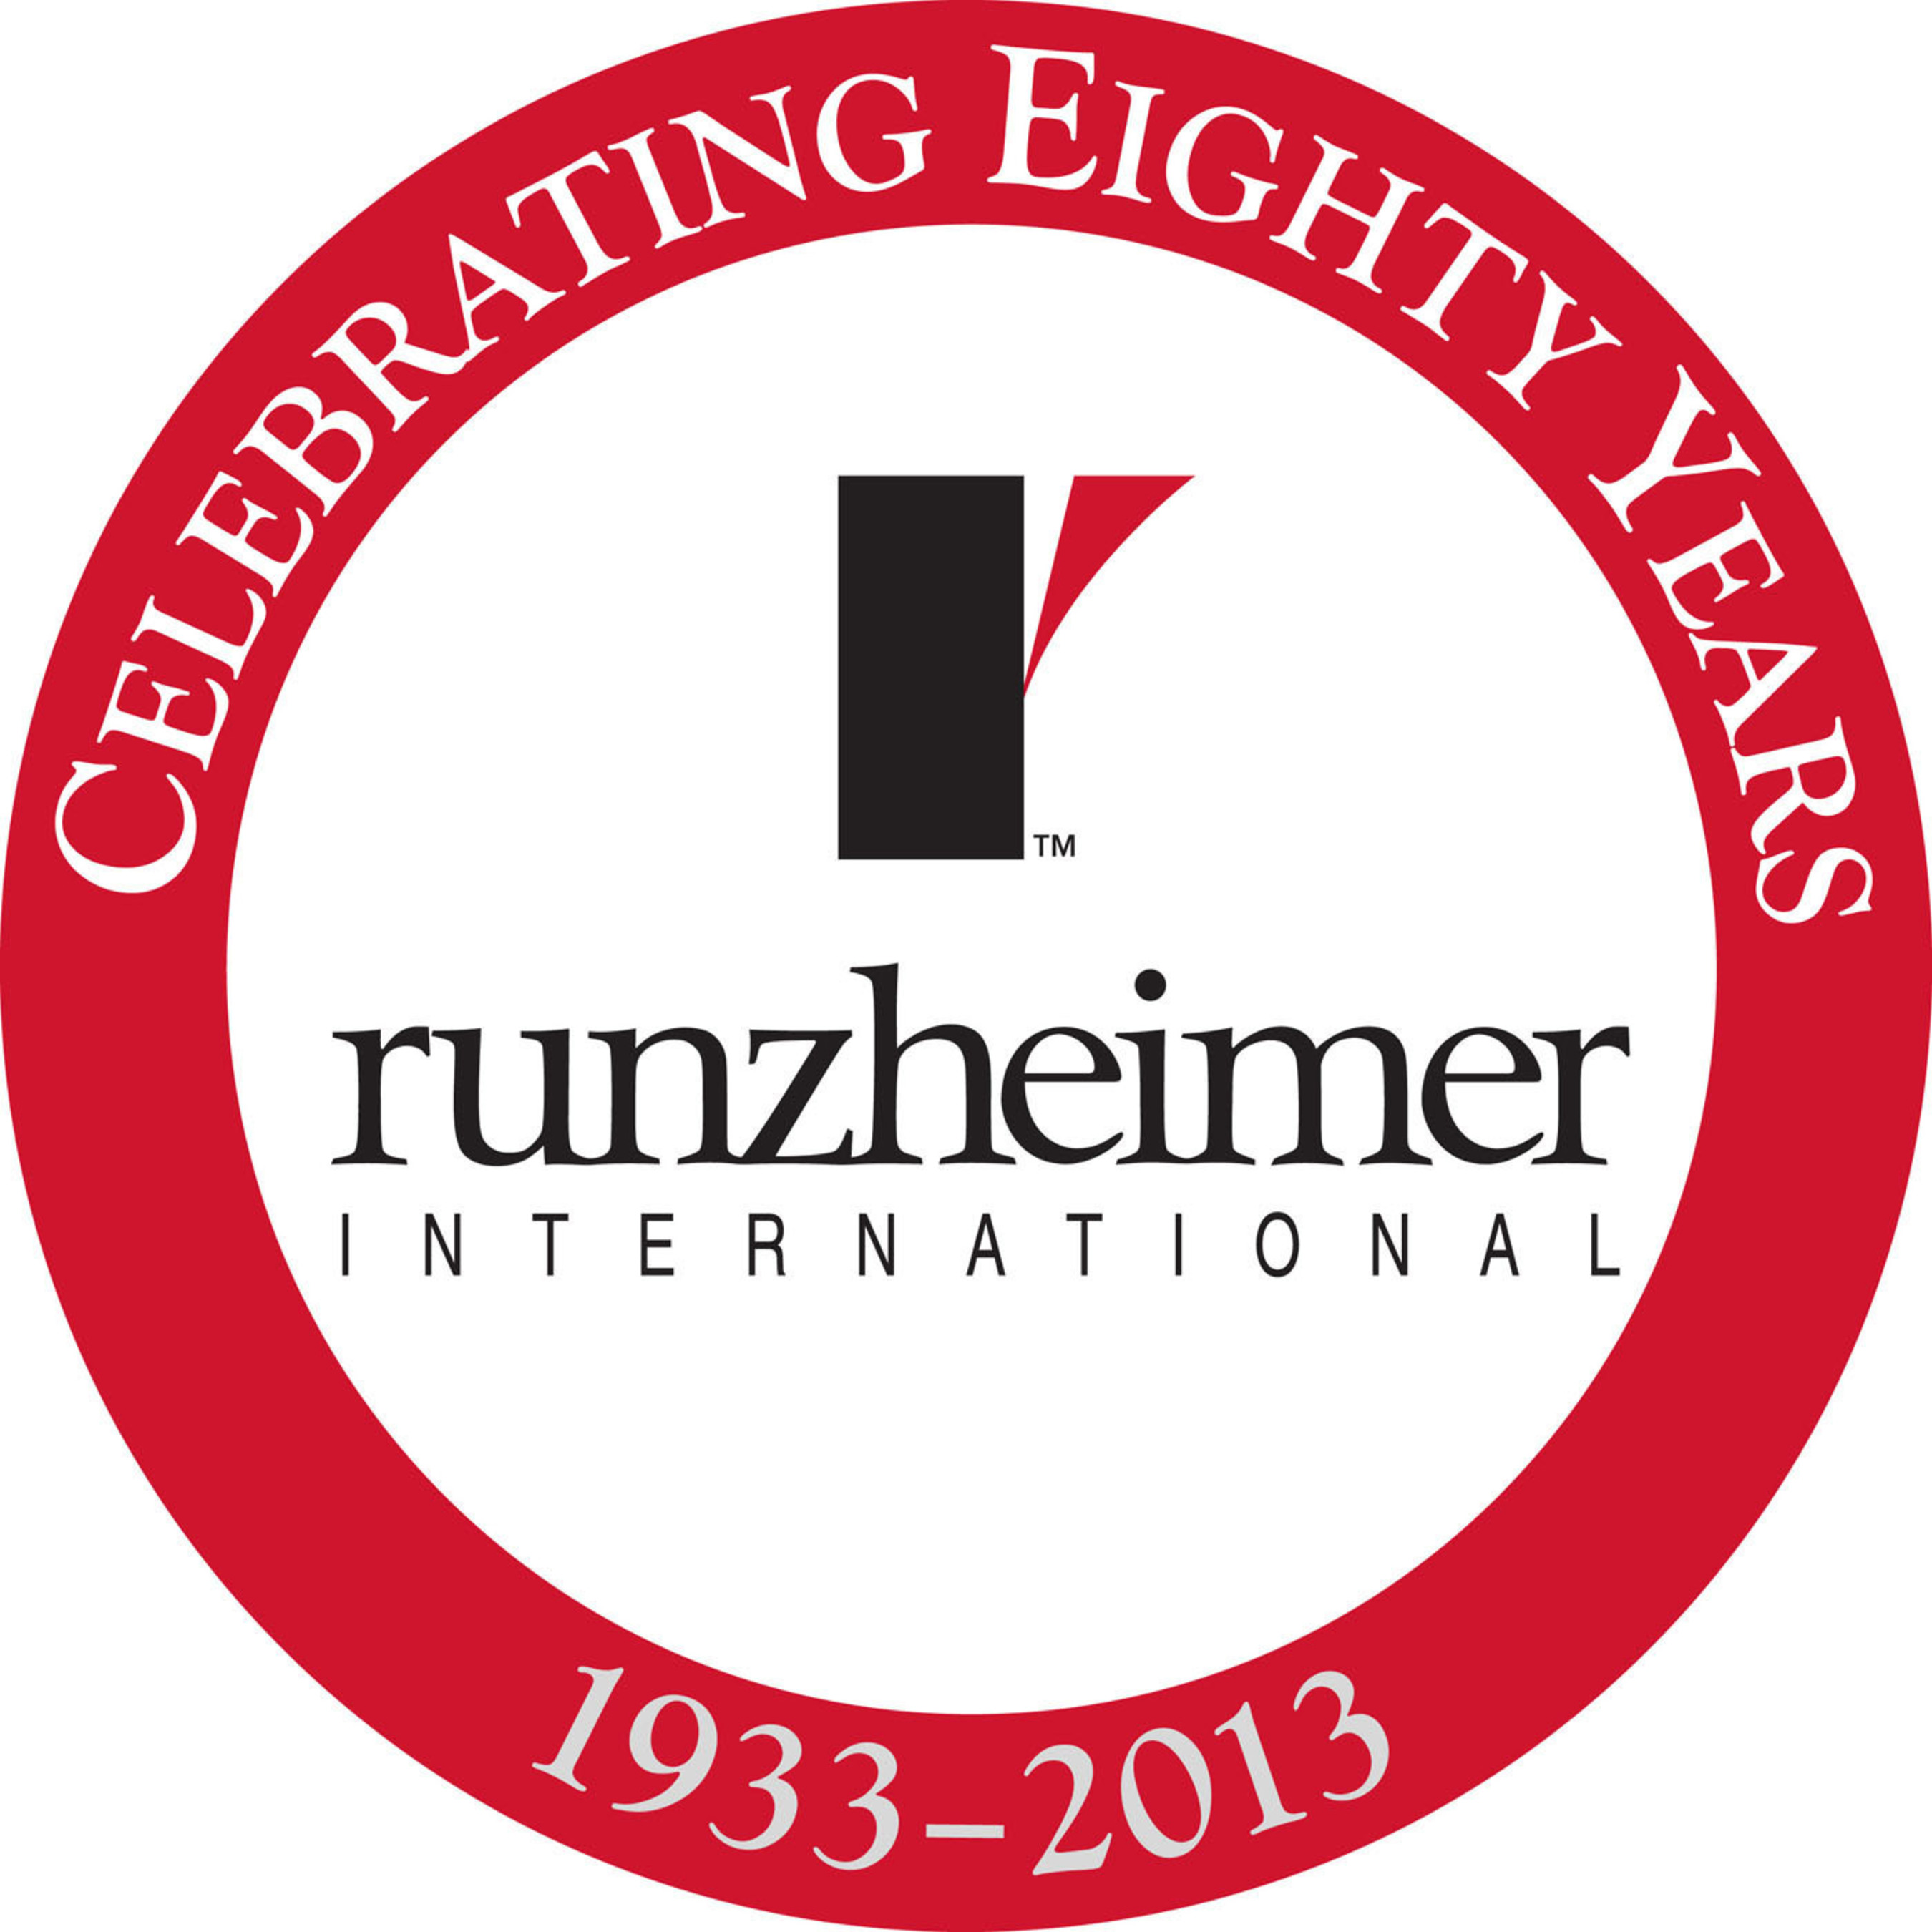 Runzheimer International Celebrates 80 Years in Business as Leaders in Mobile Workforce Management. (PRNewsFoto/Runzheimer International) (PRNewsFoto/RUNZHEIMER INTERNATIONAL)